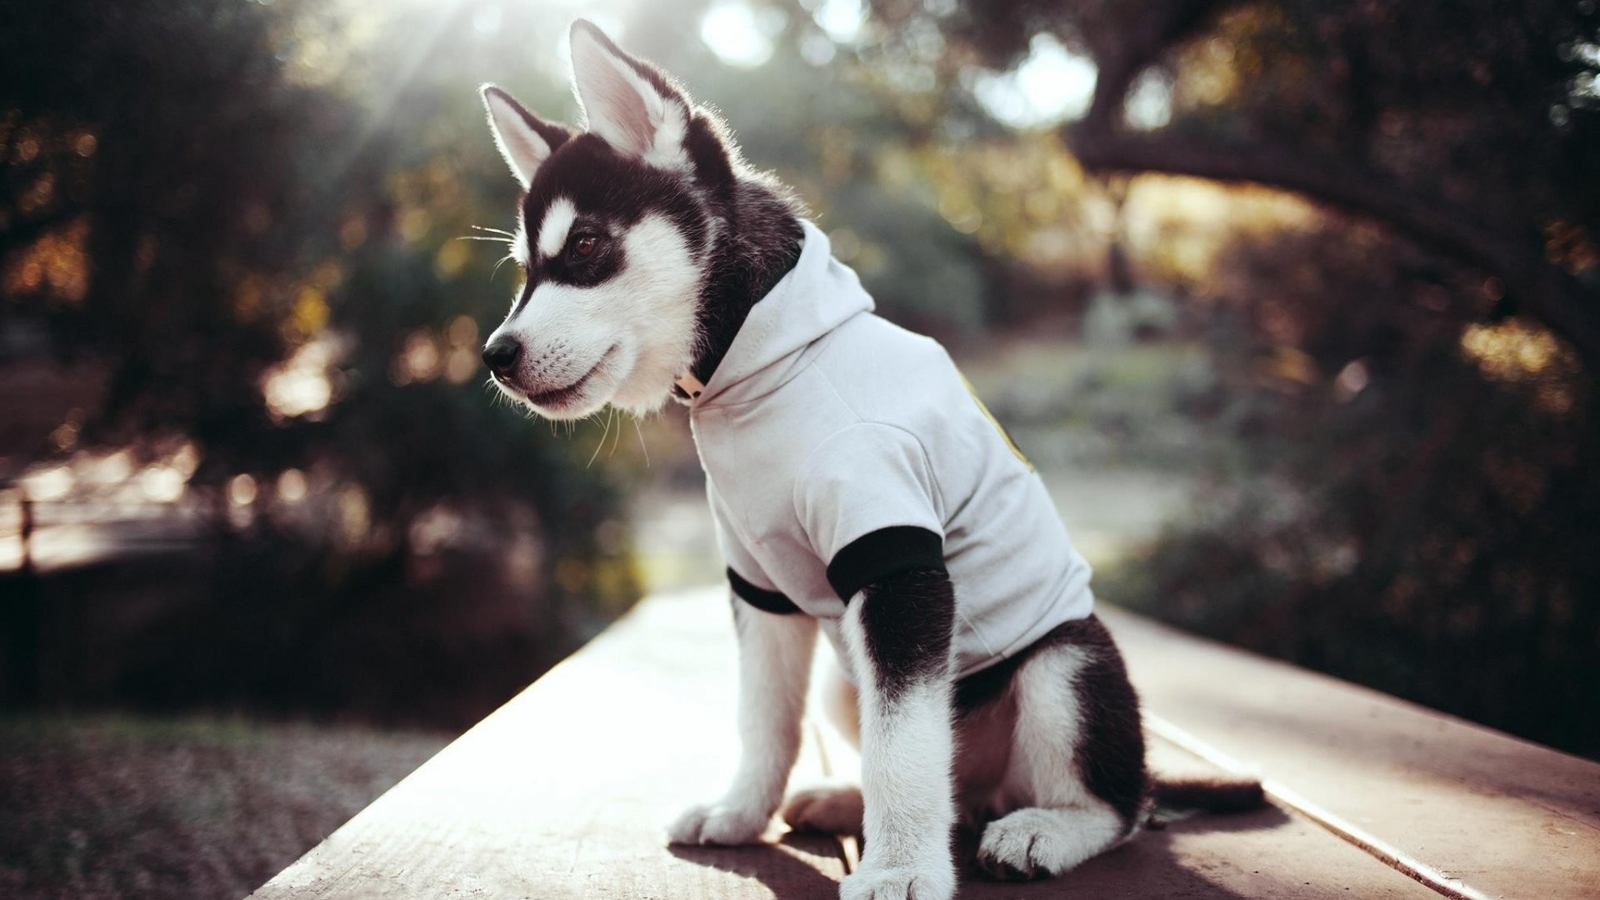 Image: Dog, puppy, bench, Siberian, husky, clothing, light, day, Park